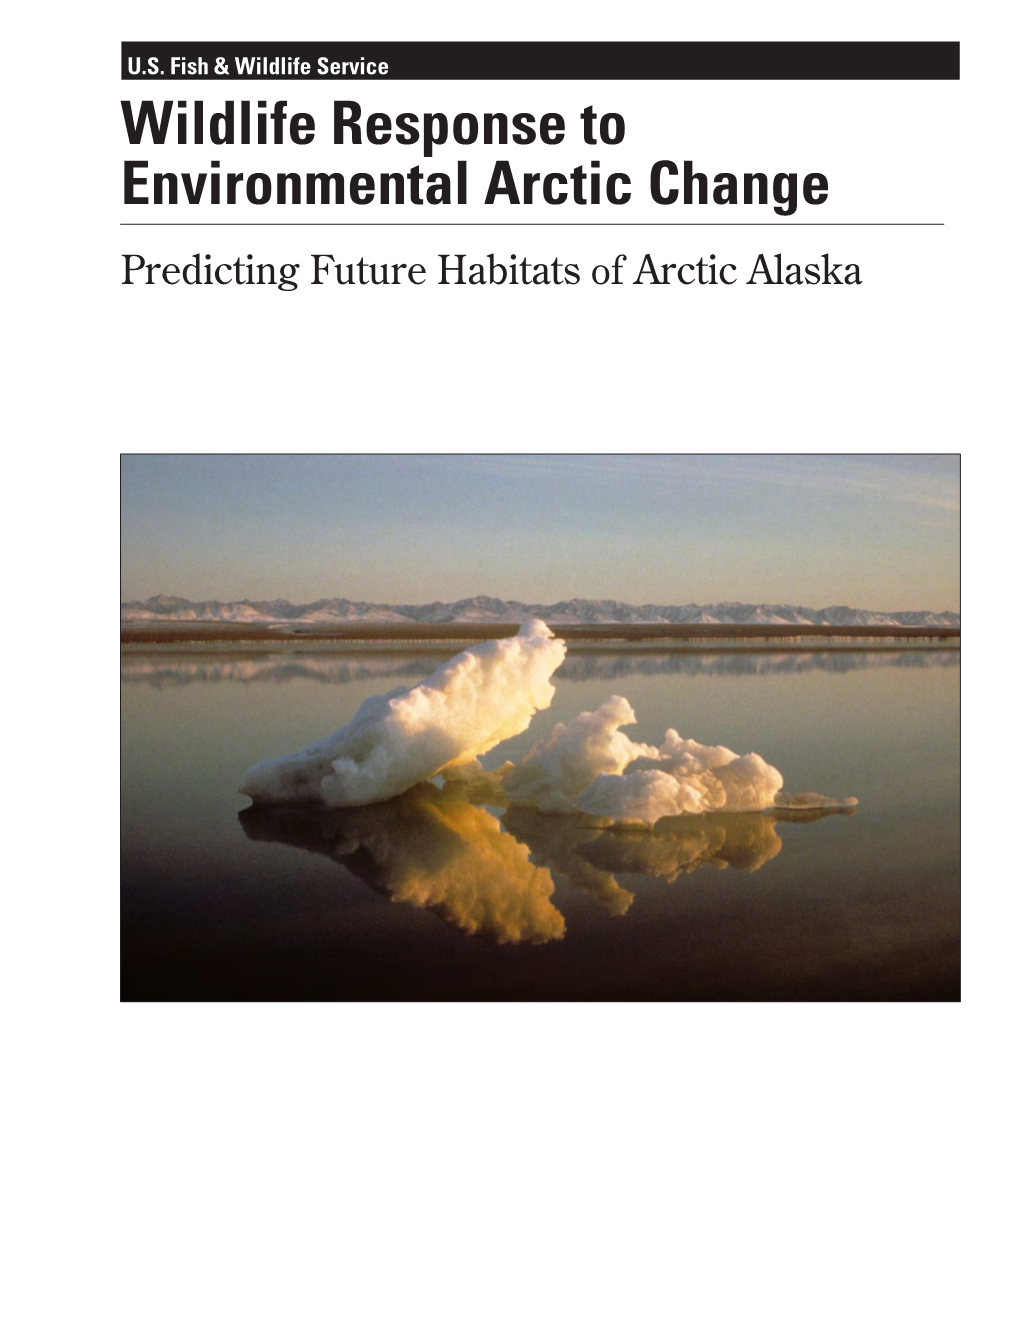 Wildlife Response to Environmental Arctic Change